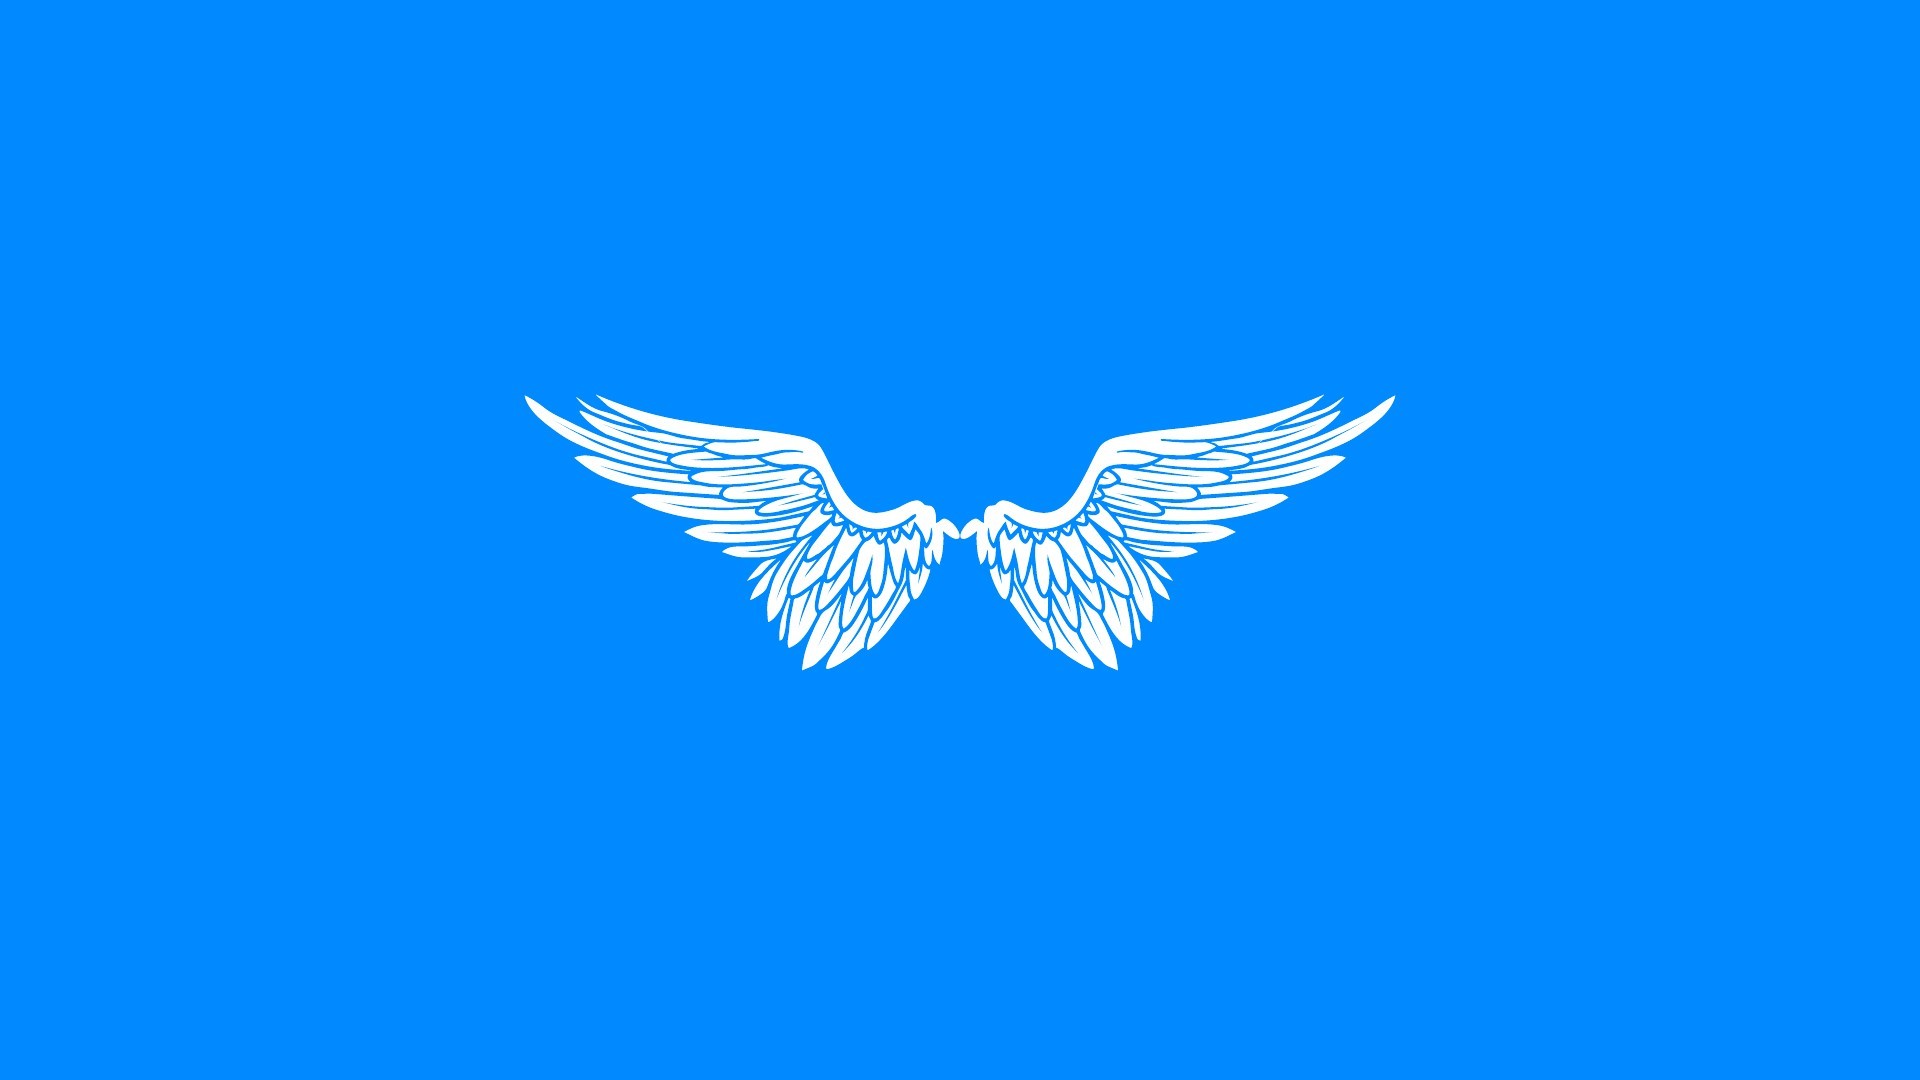 Wallpaper, illustration, simple background, minimalism, wings, angel, blue background, bird of prey, eagle, wing, perching bird 1920x1080